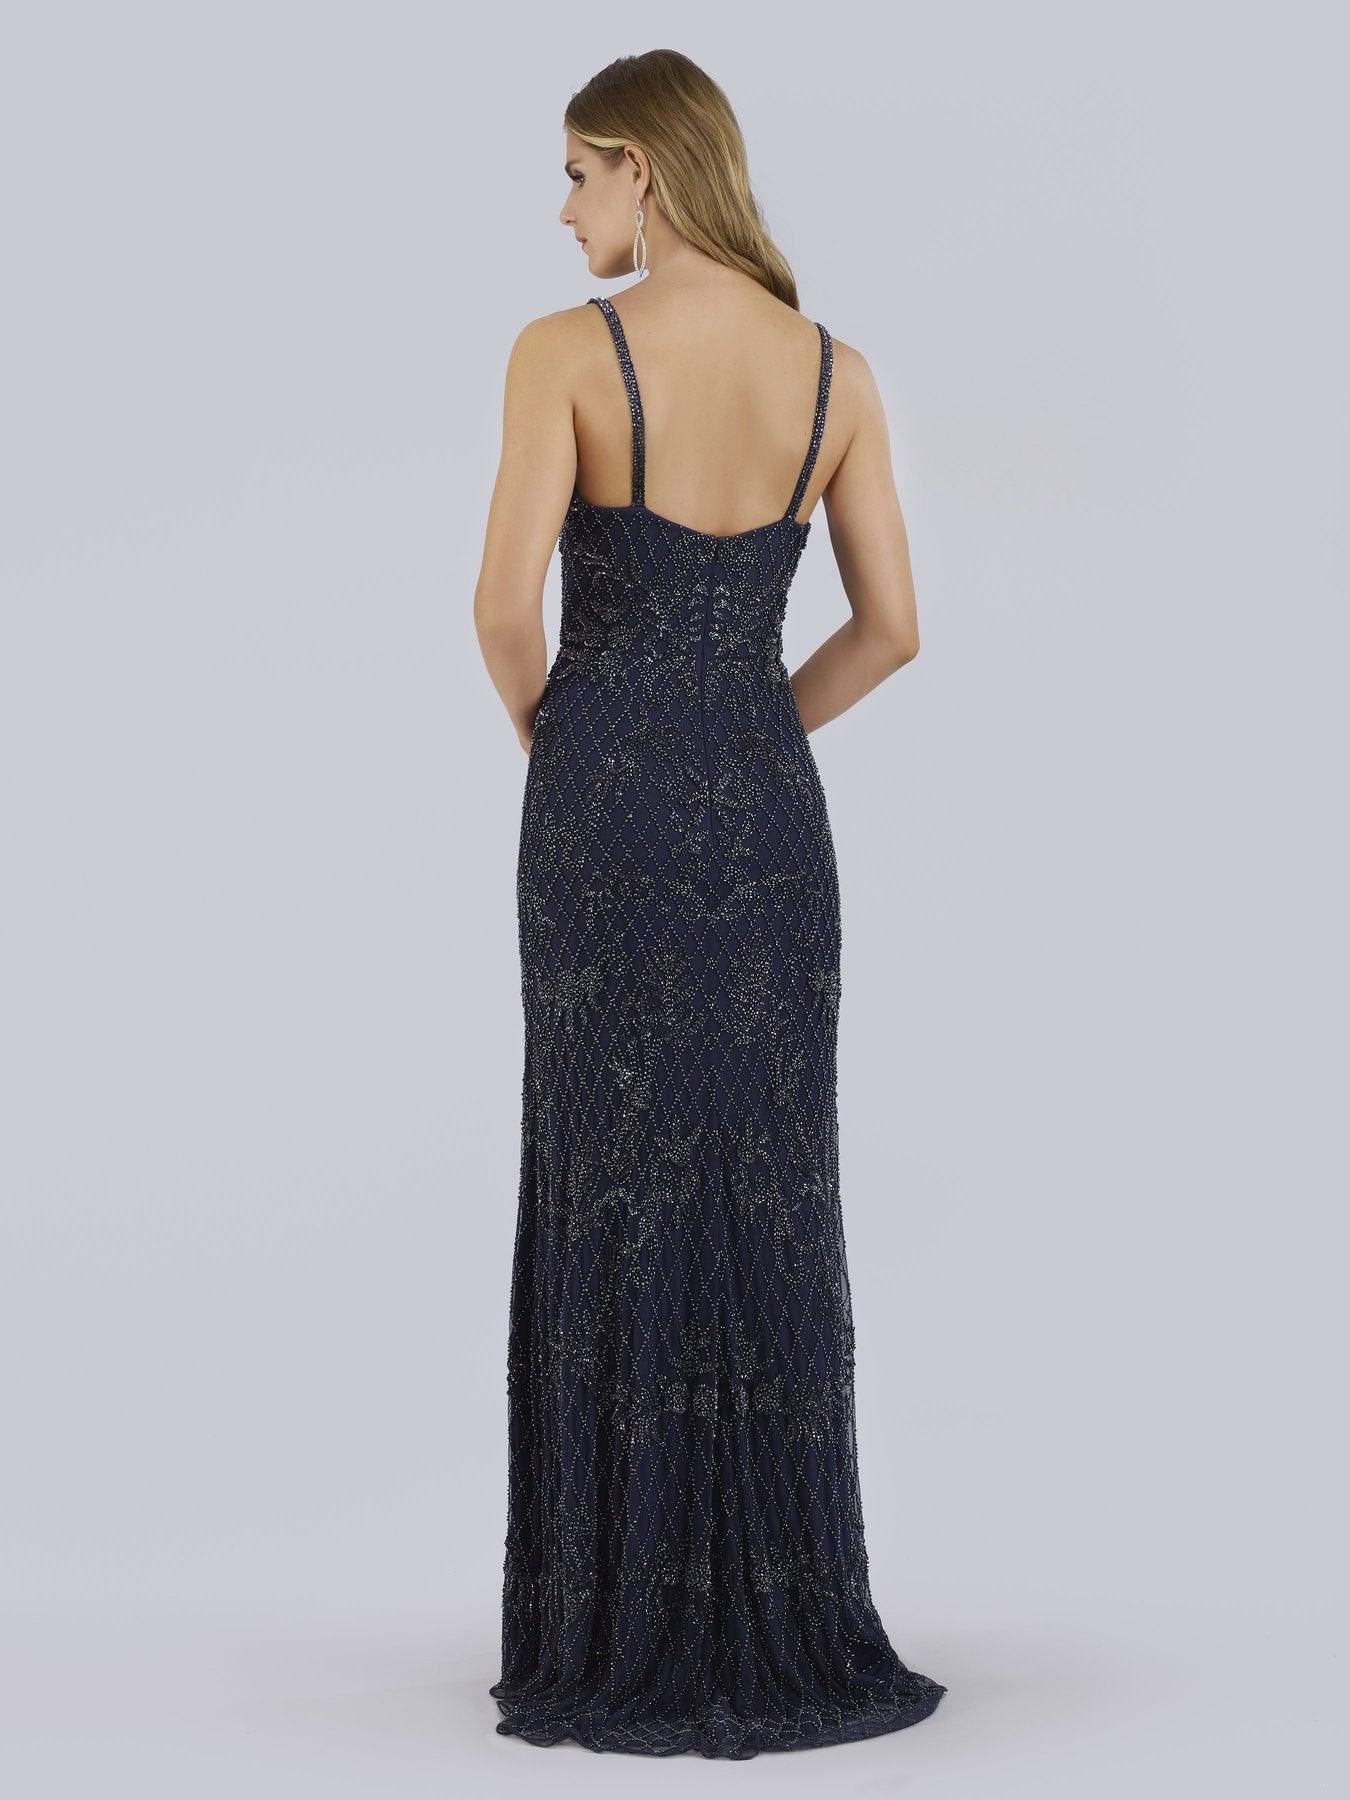 Lara Dresses Long Sleeveless Prom Dress 29807 - The Dress Outlet